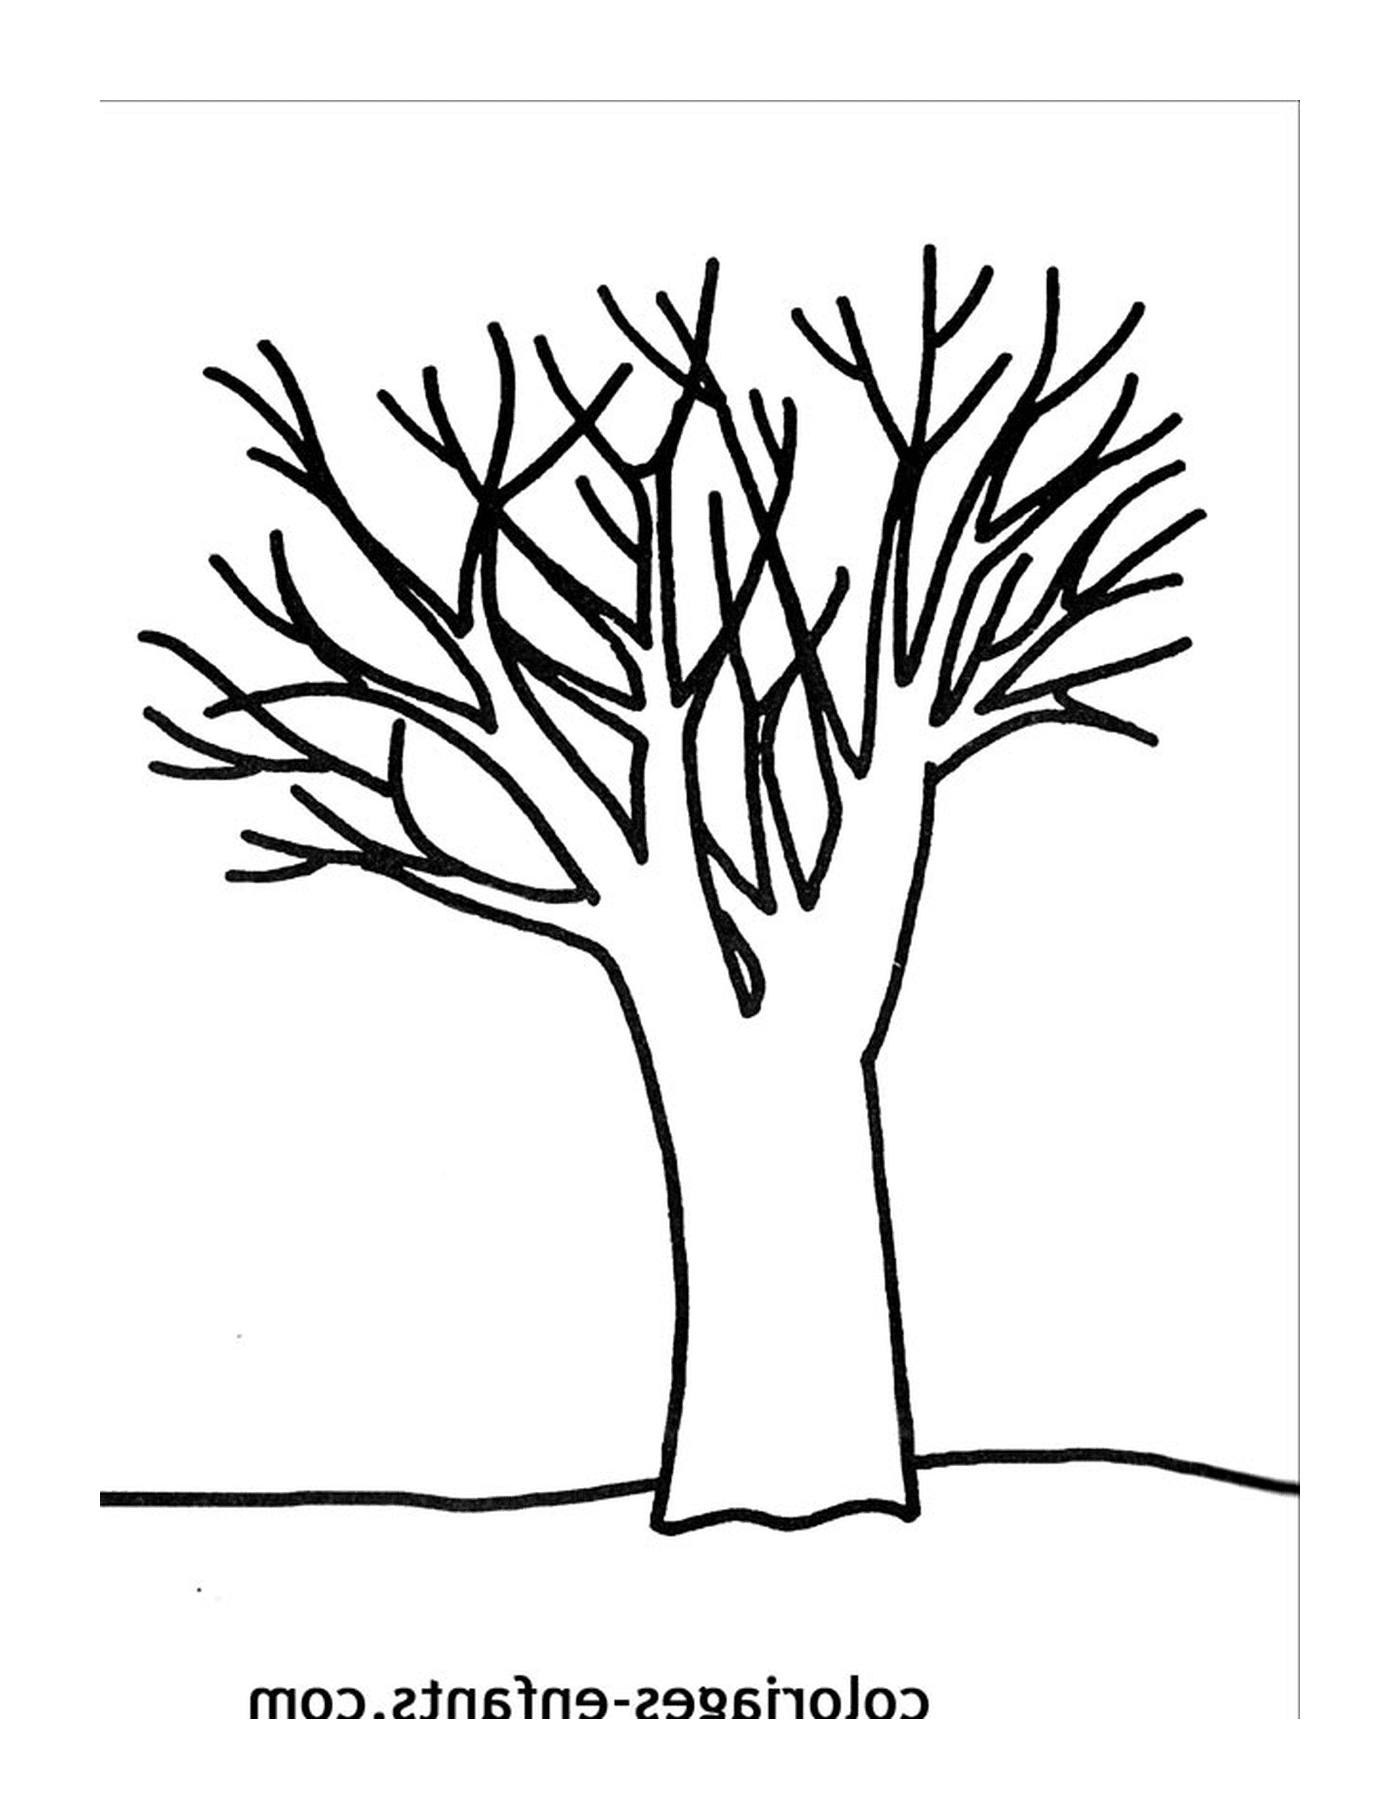  Un albero nudo 